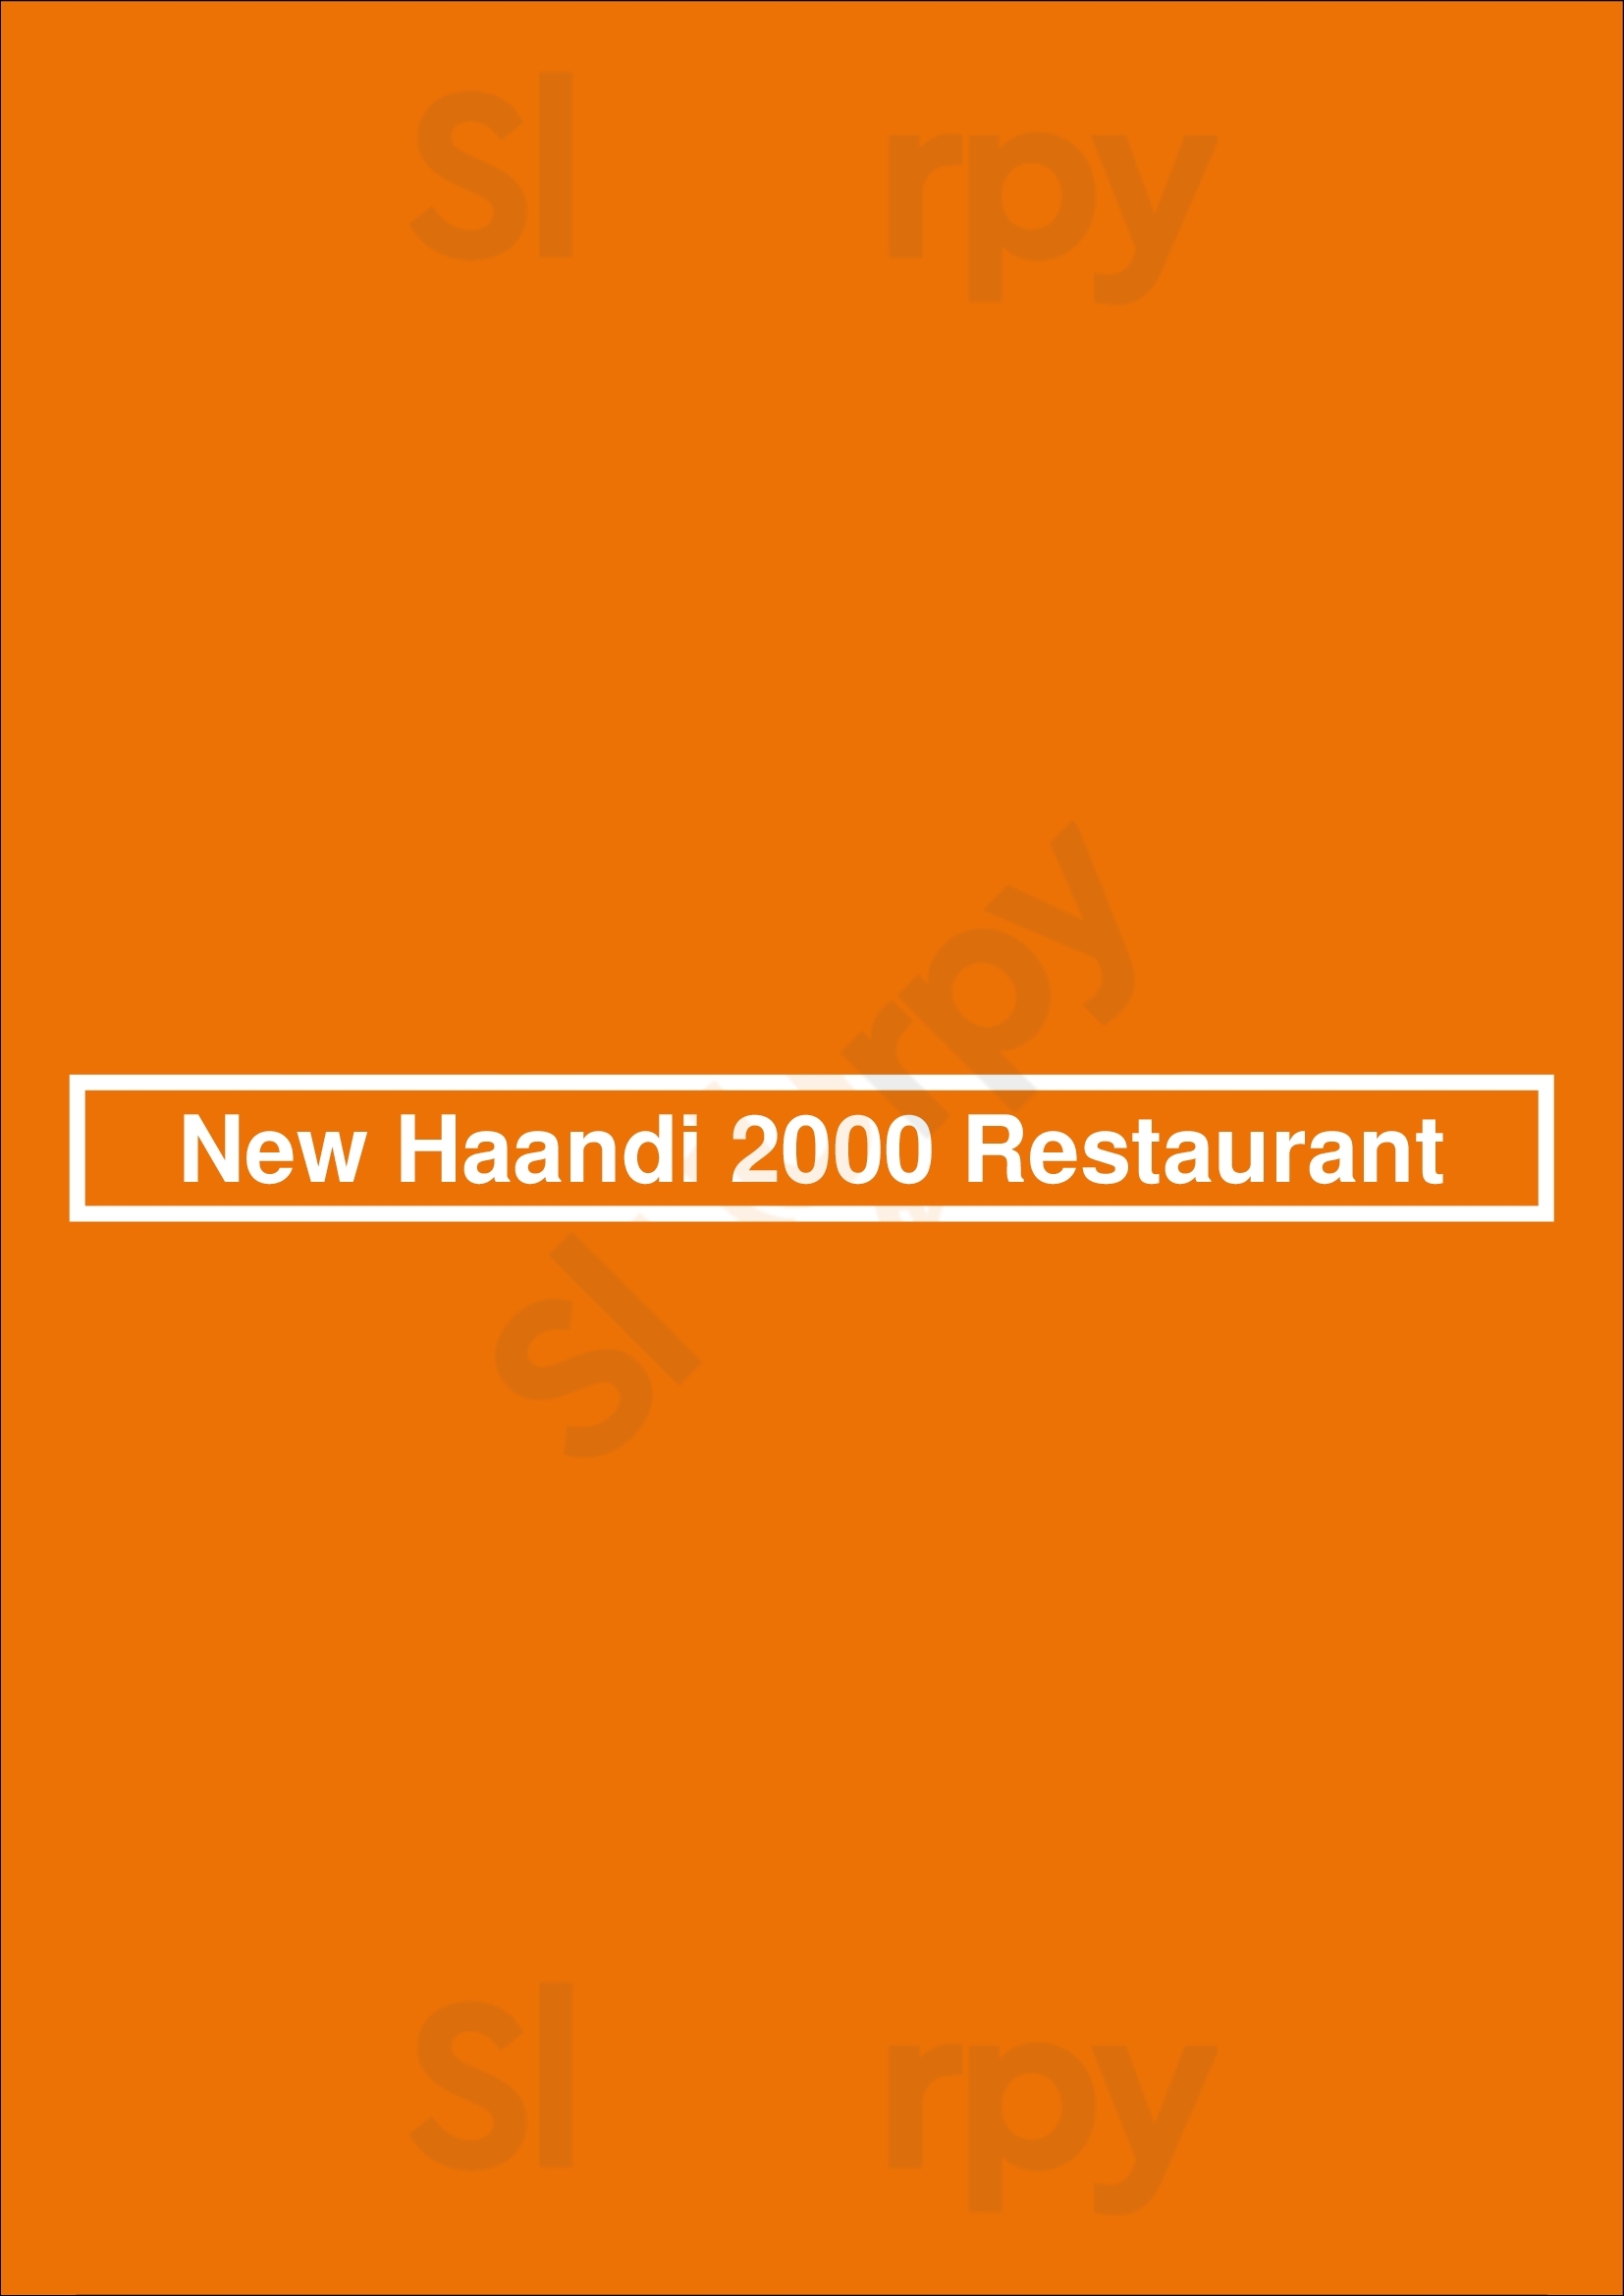 New Haandi 2000 Restaurant Toronto Menu - 1